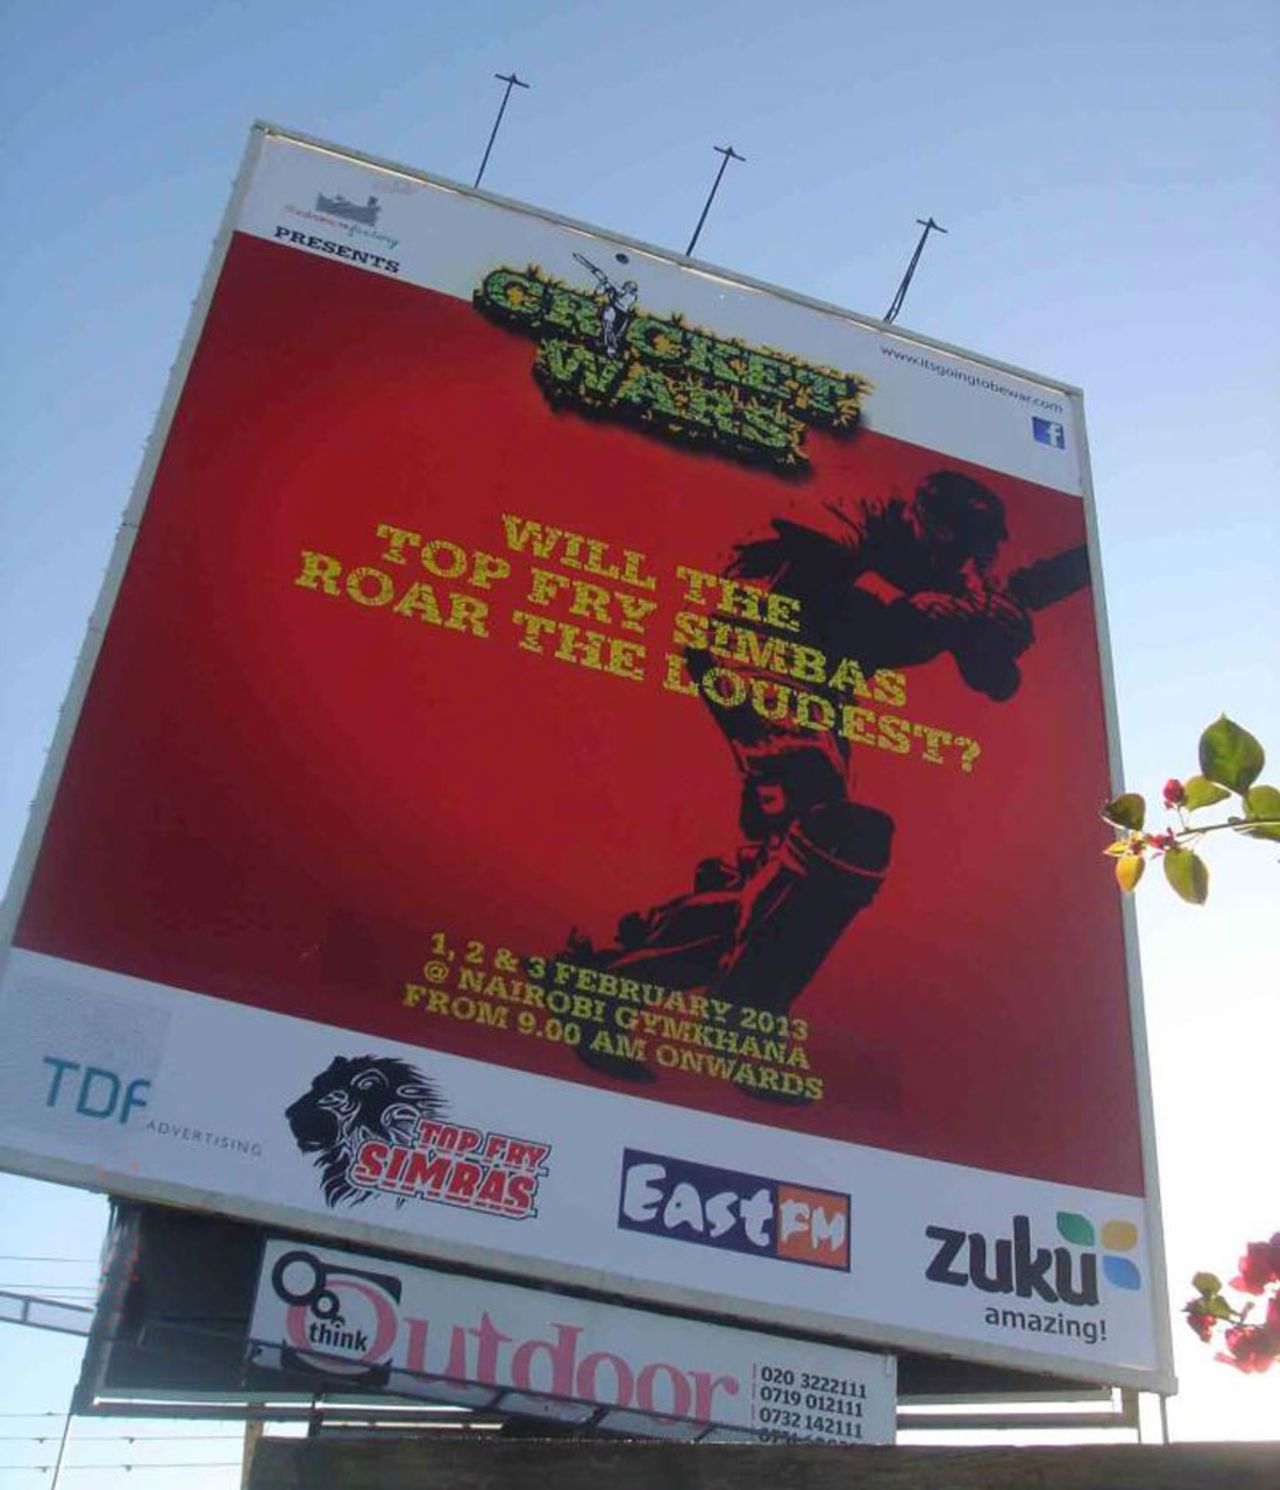 A billboard for Cricket Wars in Nairobi, January 22, 2013 